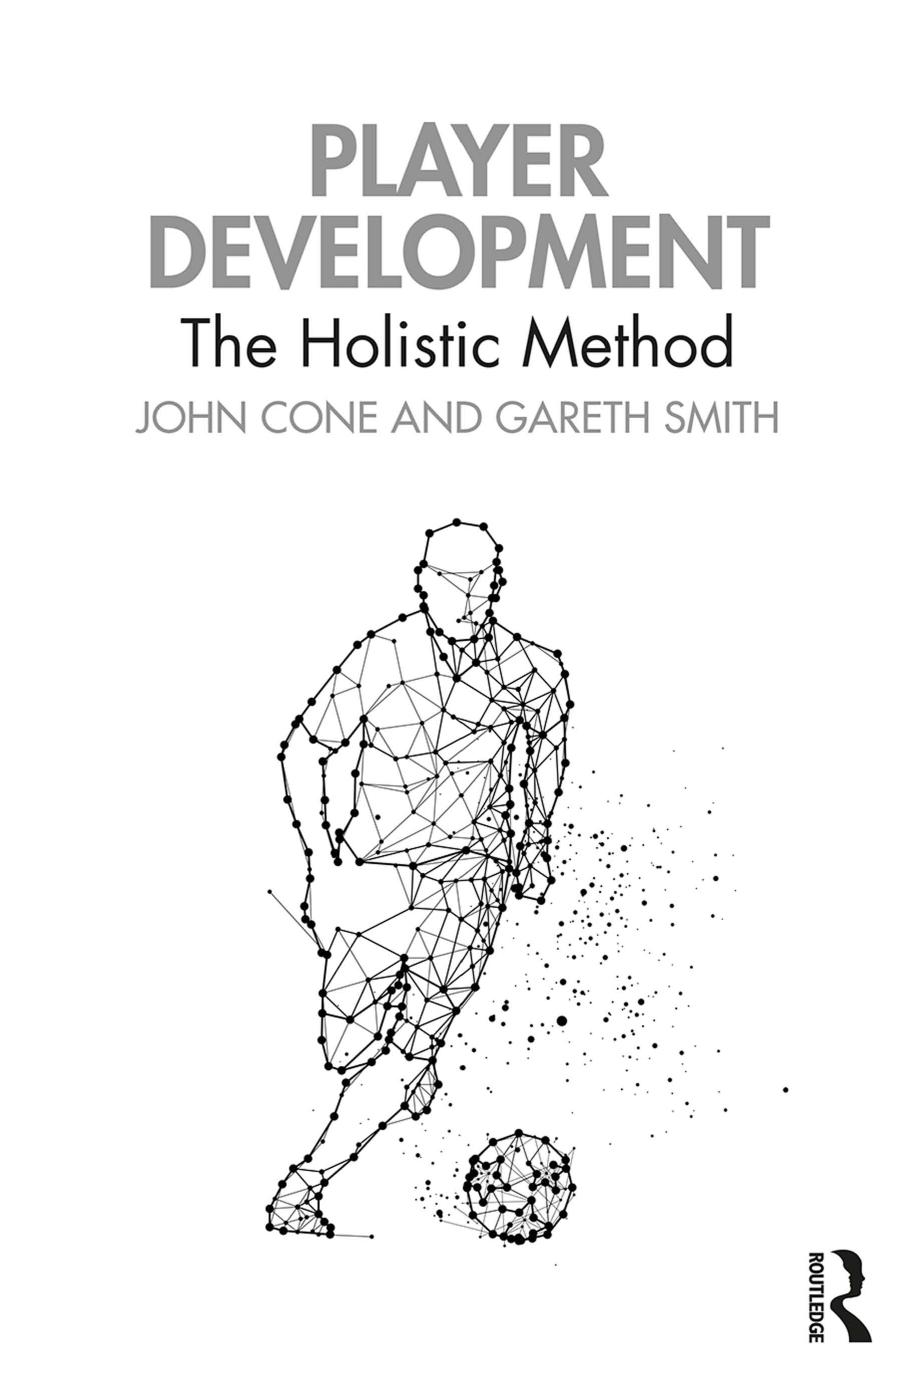 Player Development: The Holistic Method by John Cone Gareth Smith